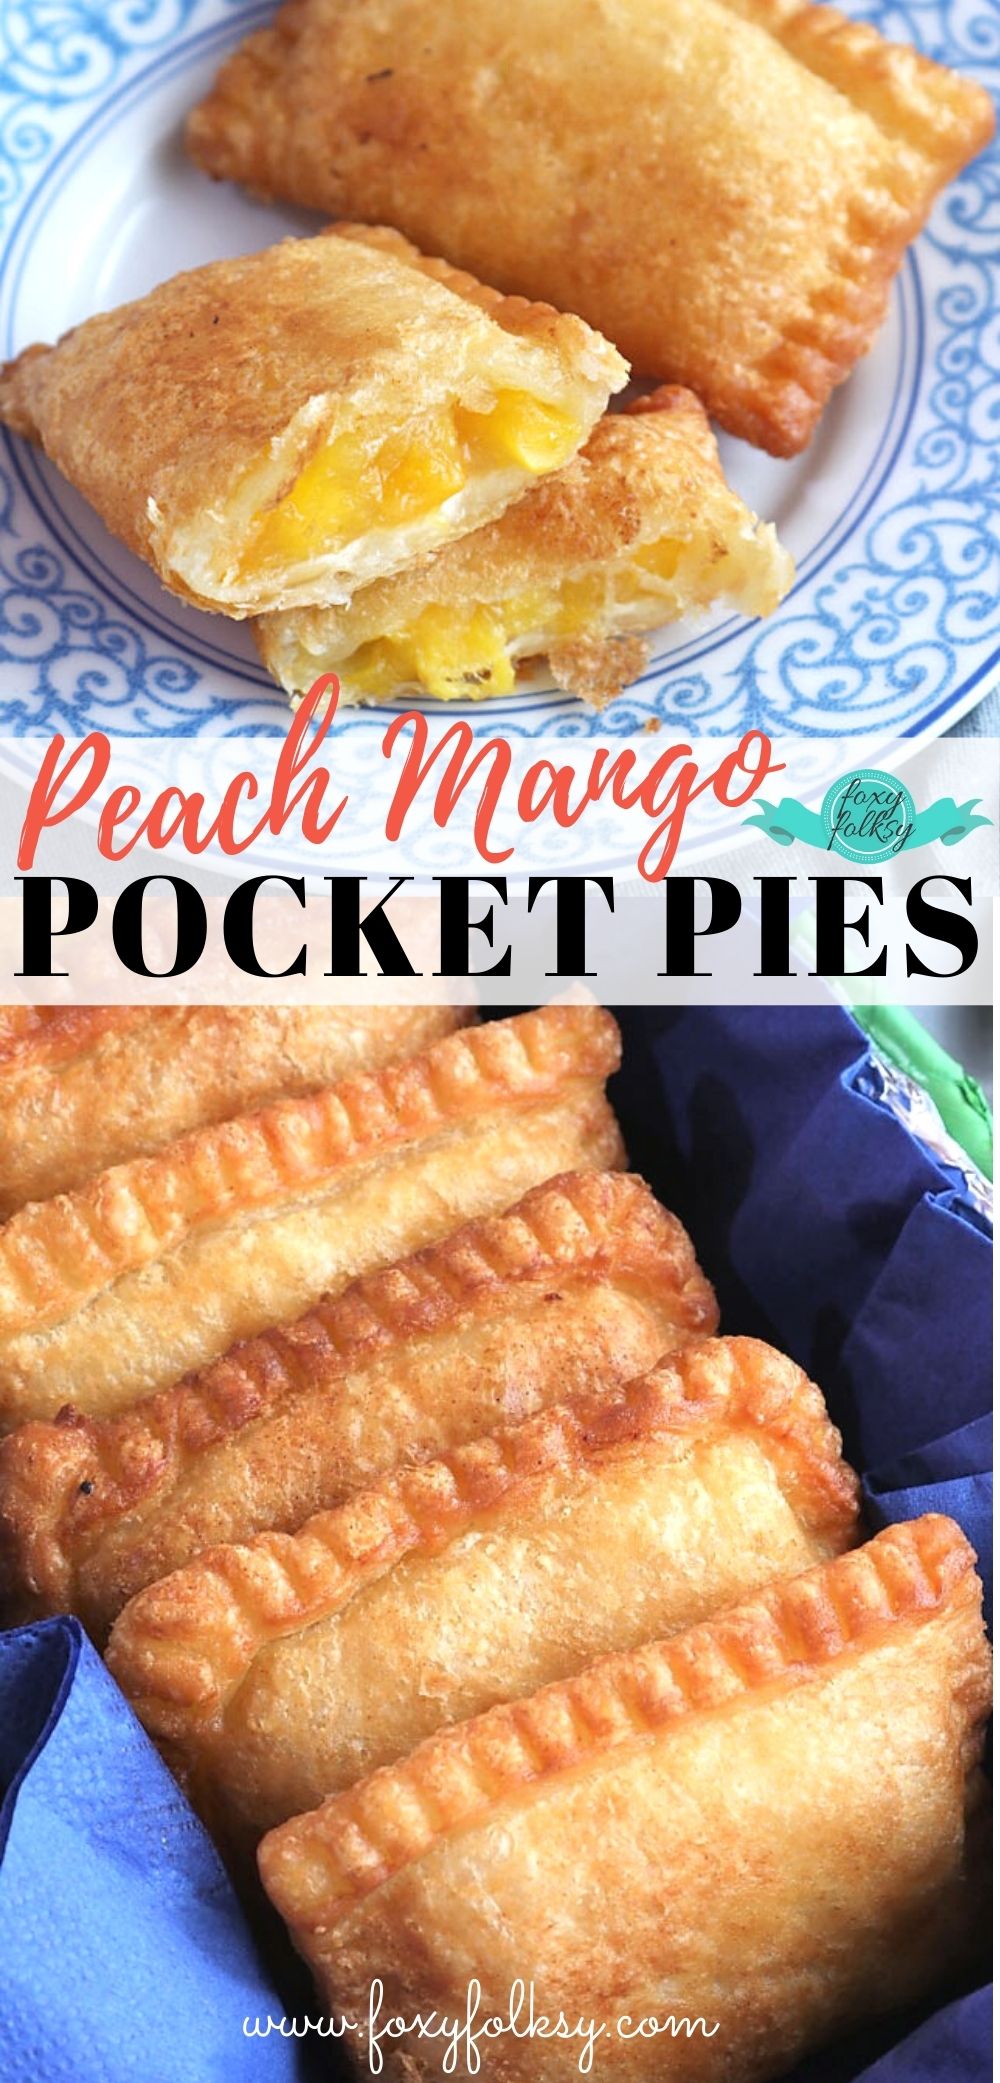 Peach-mango pie in pocket form.